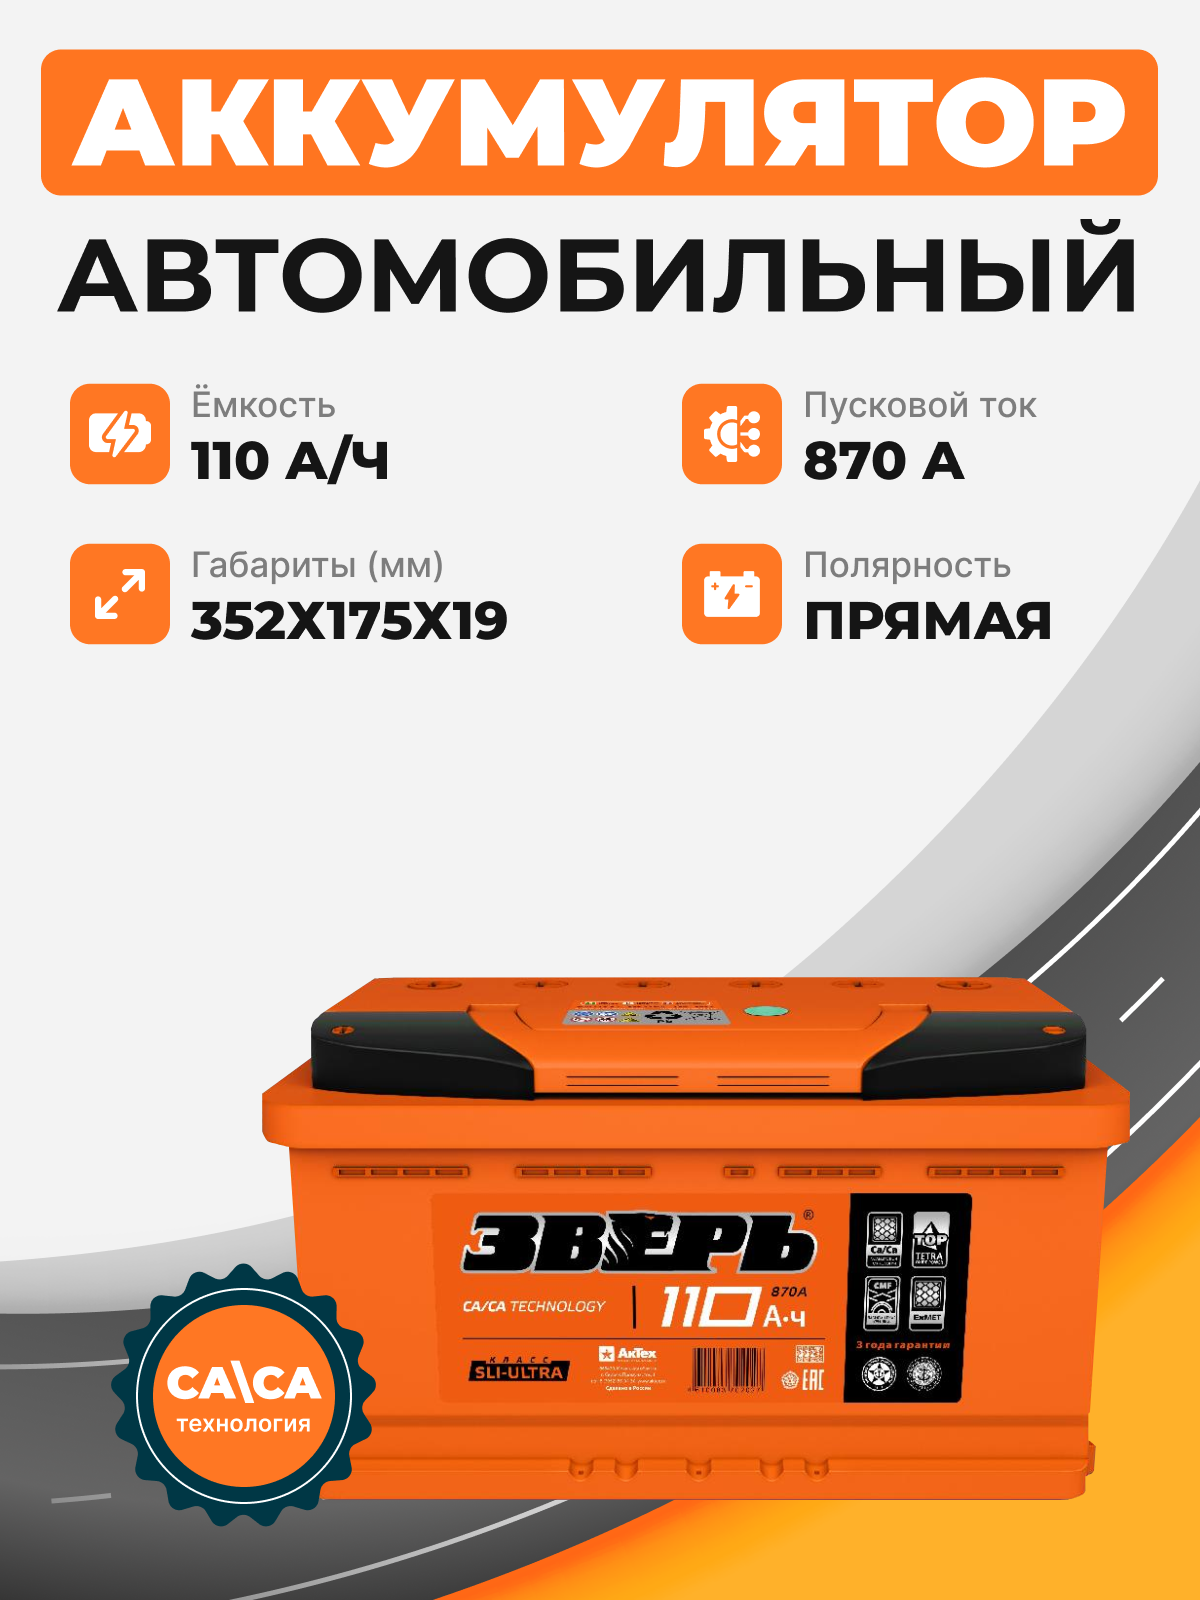 Аккумулятор Зверь 110 п.п. стартовый ток 870 EN ZVK 110-3-L